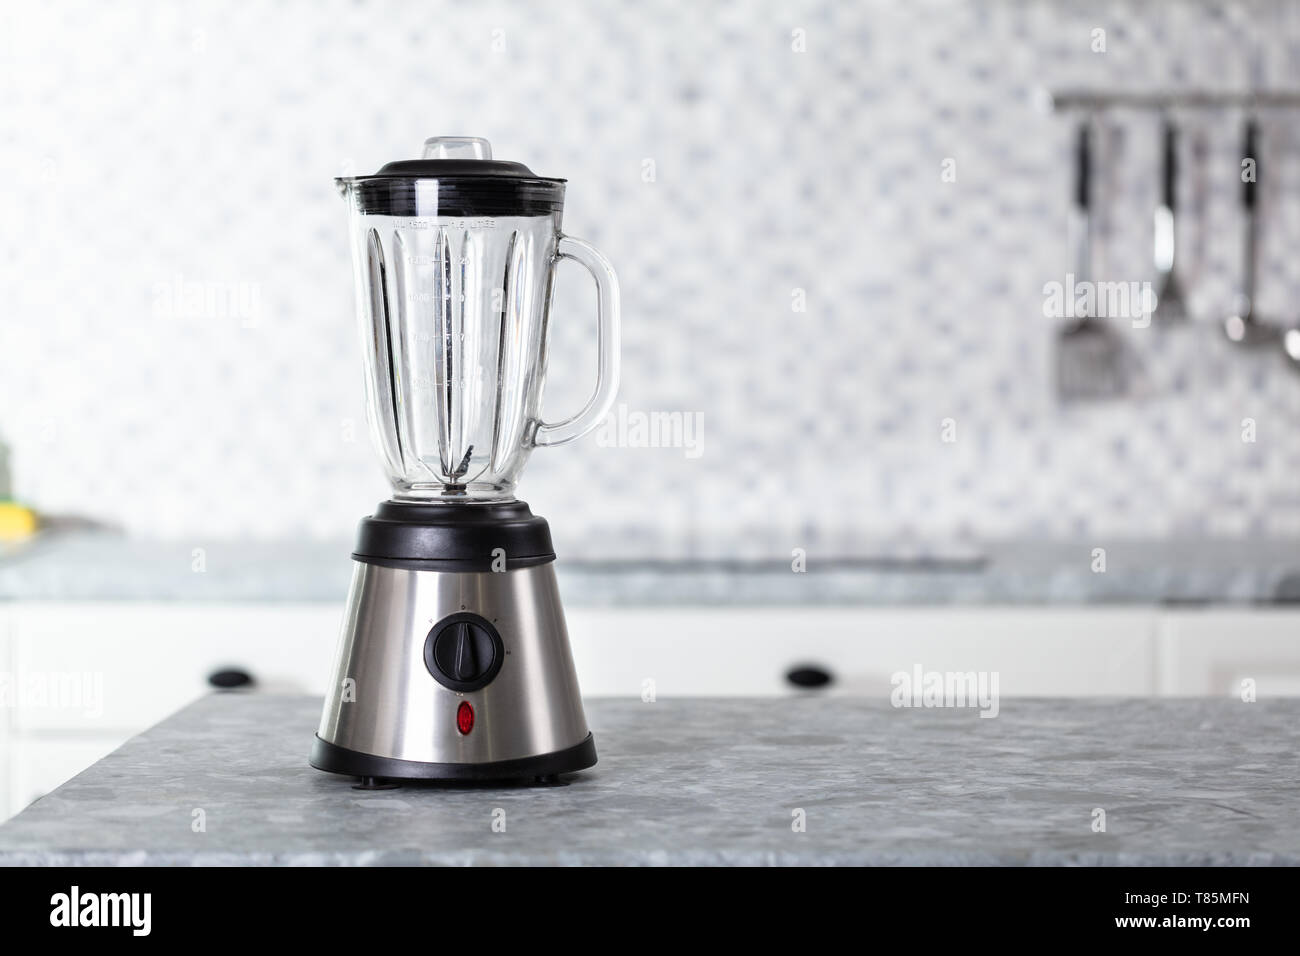 https://c8.alamy.com/comp/T85MFN/empty-electric-blender-on-modern-kitchen-worktop-T85MFN.jpg